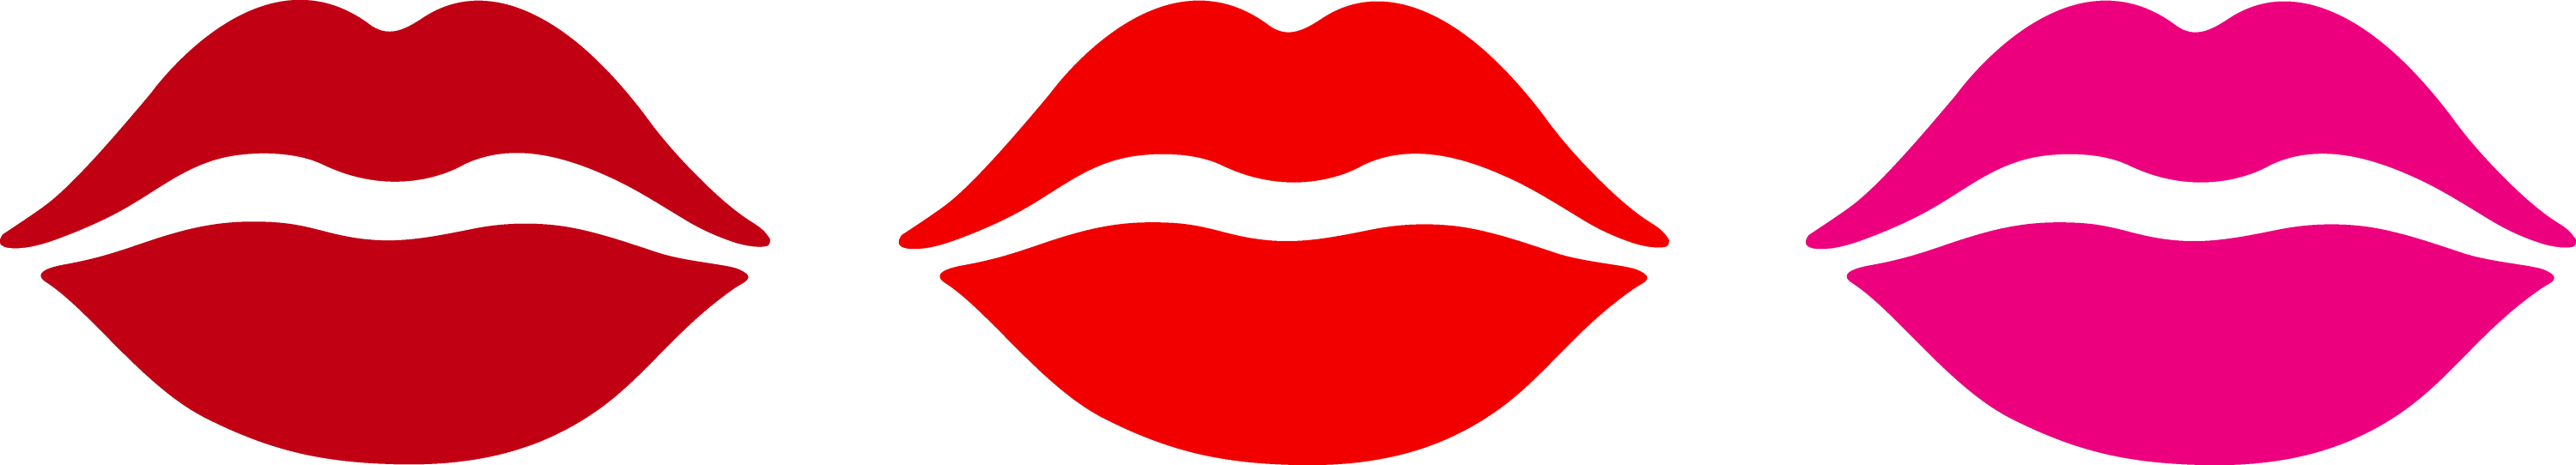 clip art big red lips - photo #31